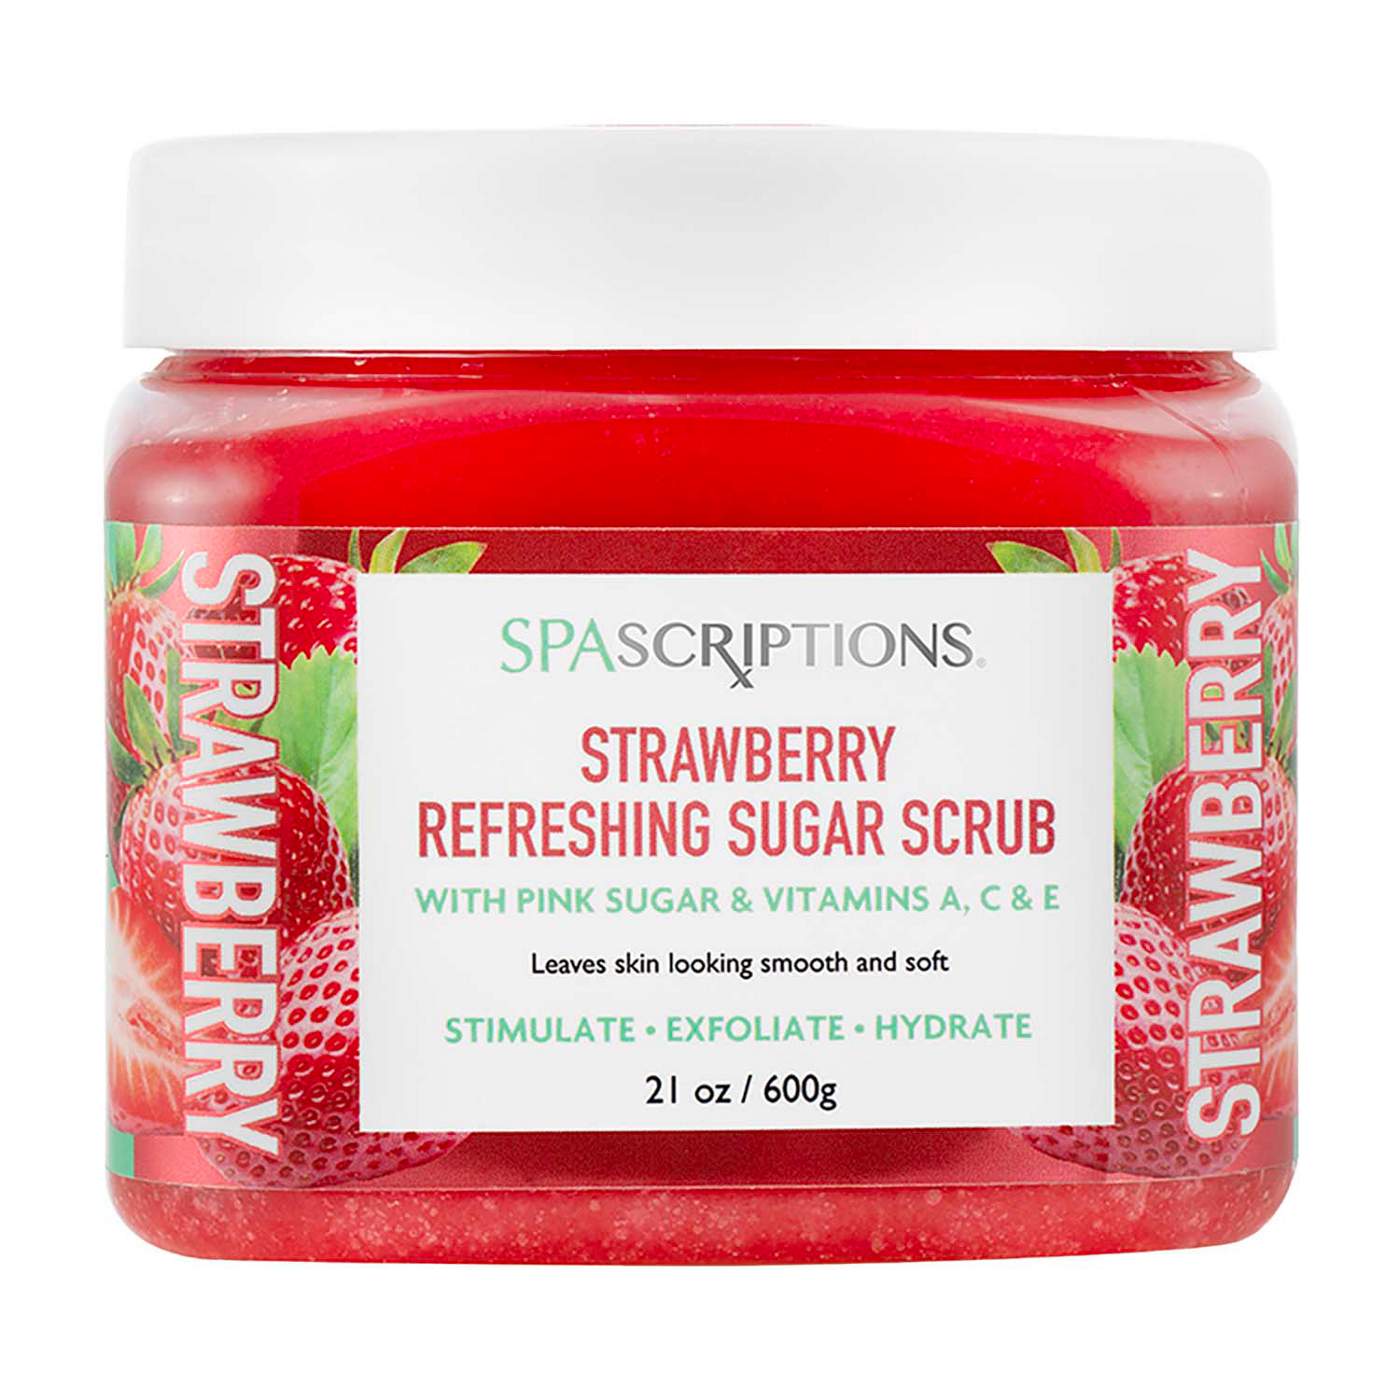 SpaScriptions Refreshing Sugar Scrub - Strawberry; image 1 of 5